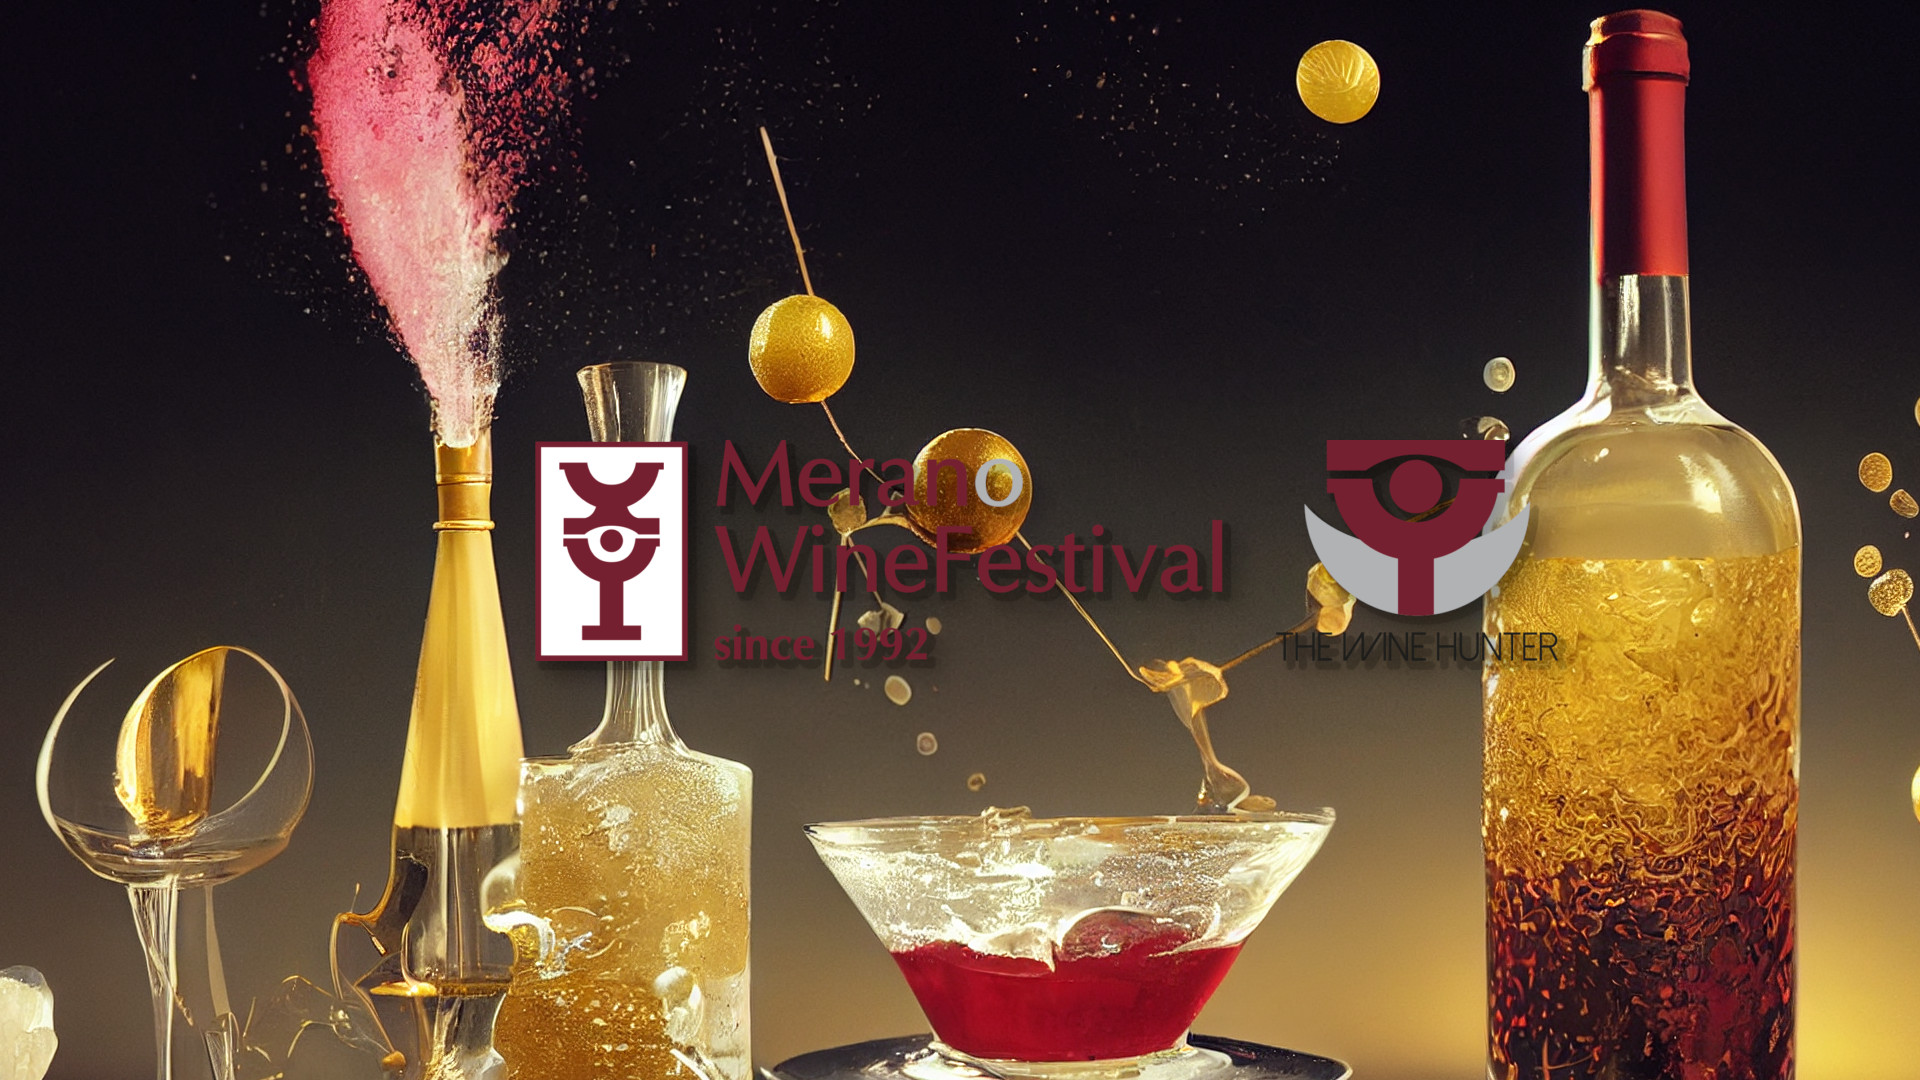 kchai-art kch merano winefestival 2022 Buyering Financial